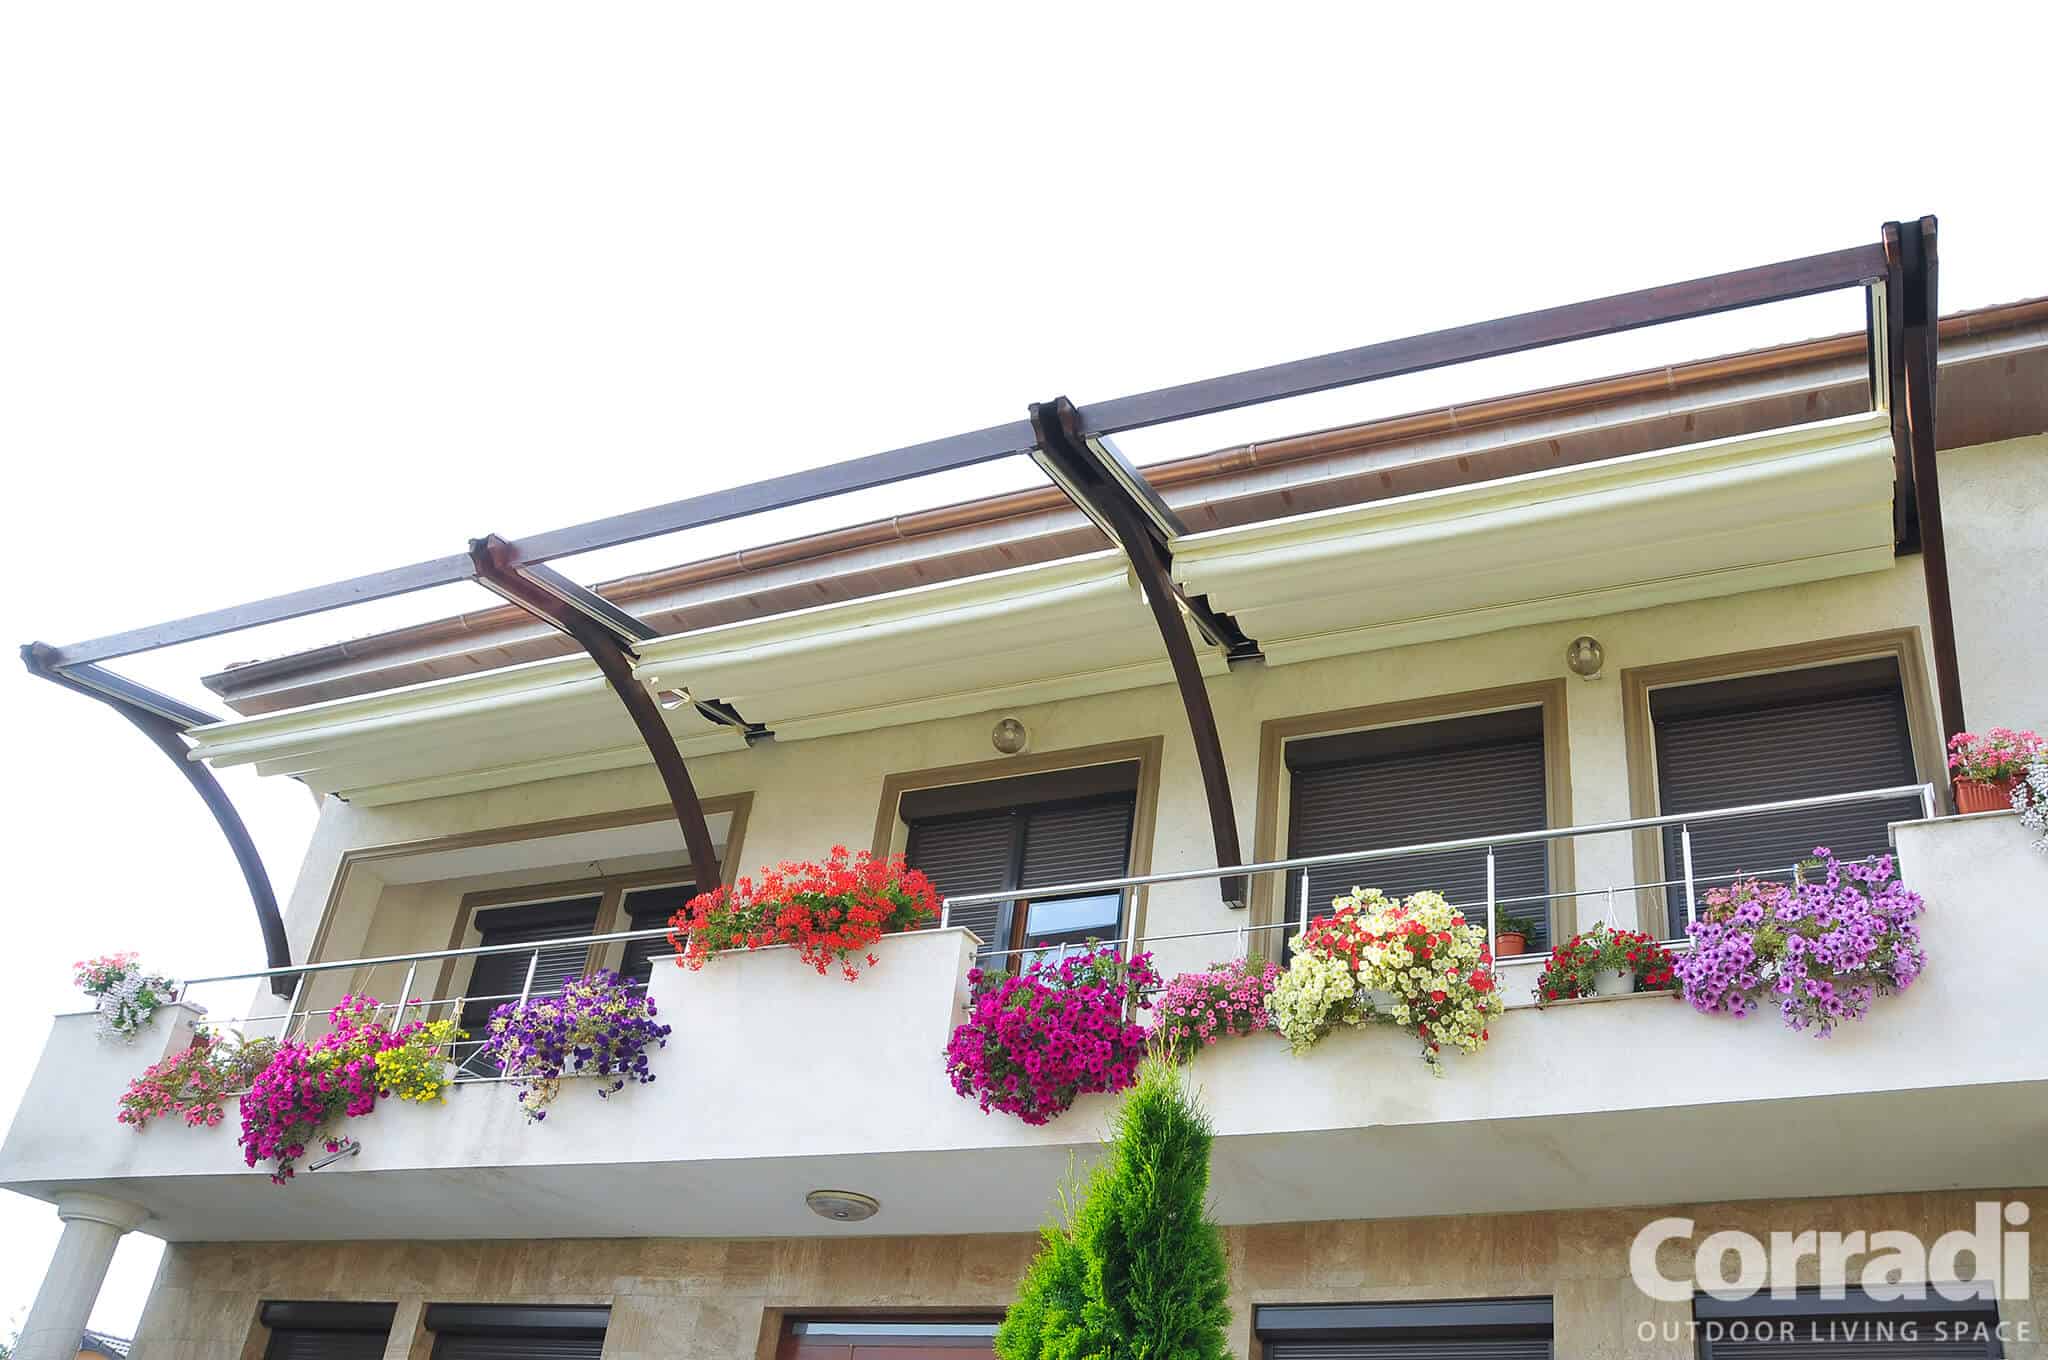 pergole retractabile pentru terasa, gradina, balcon made in Italy